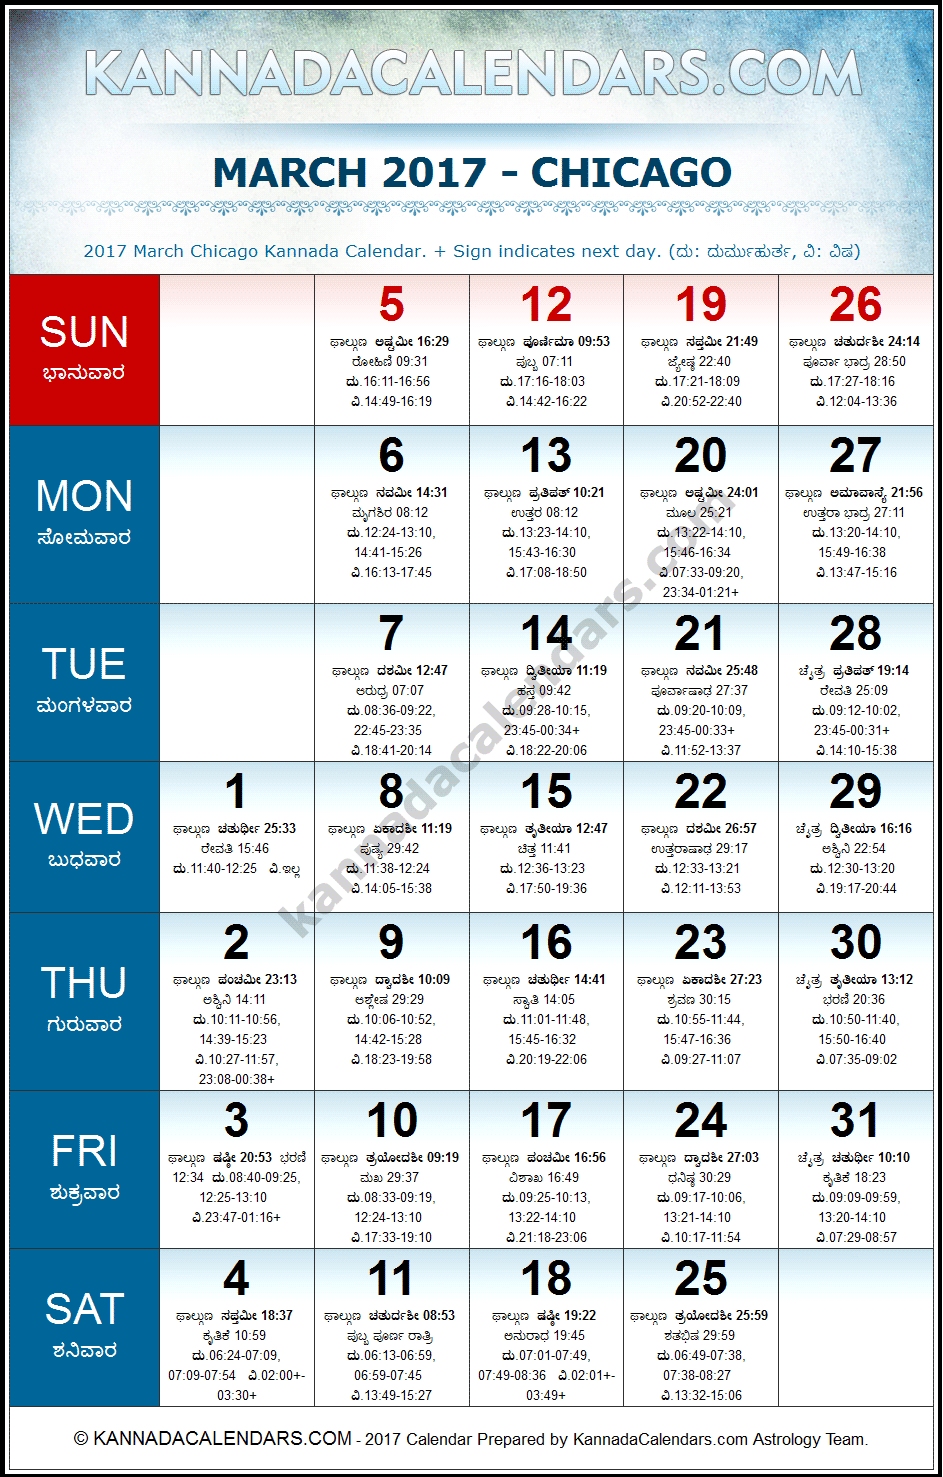 March 2017 Kannada Calendar for Chicago, USA